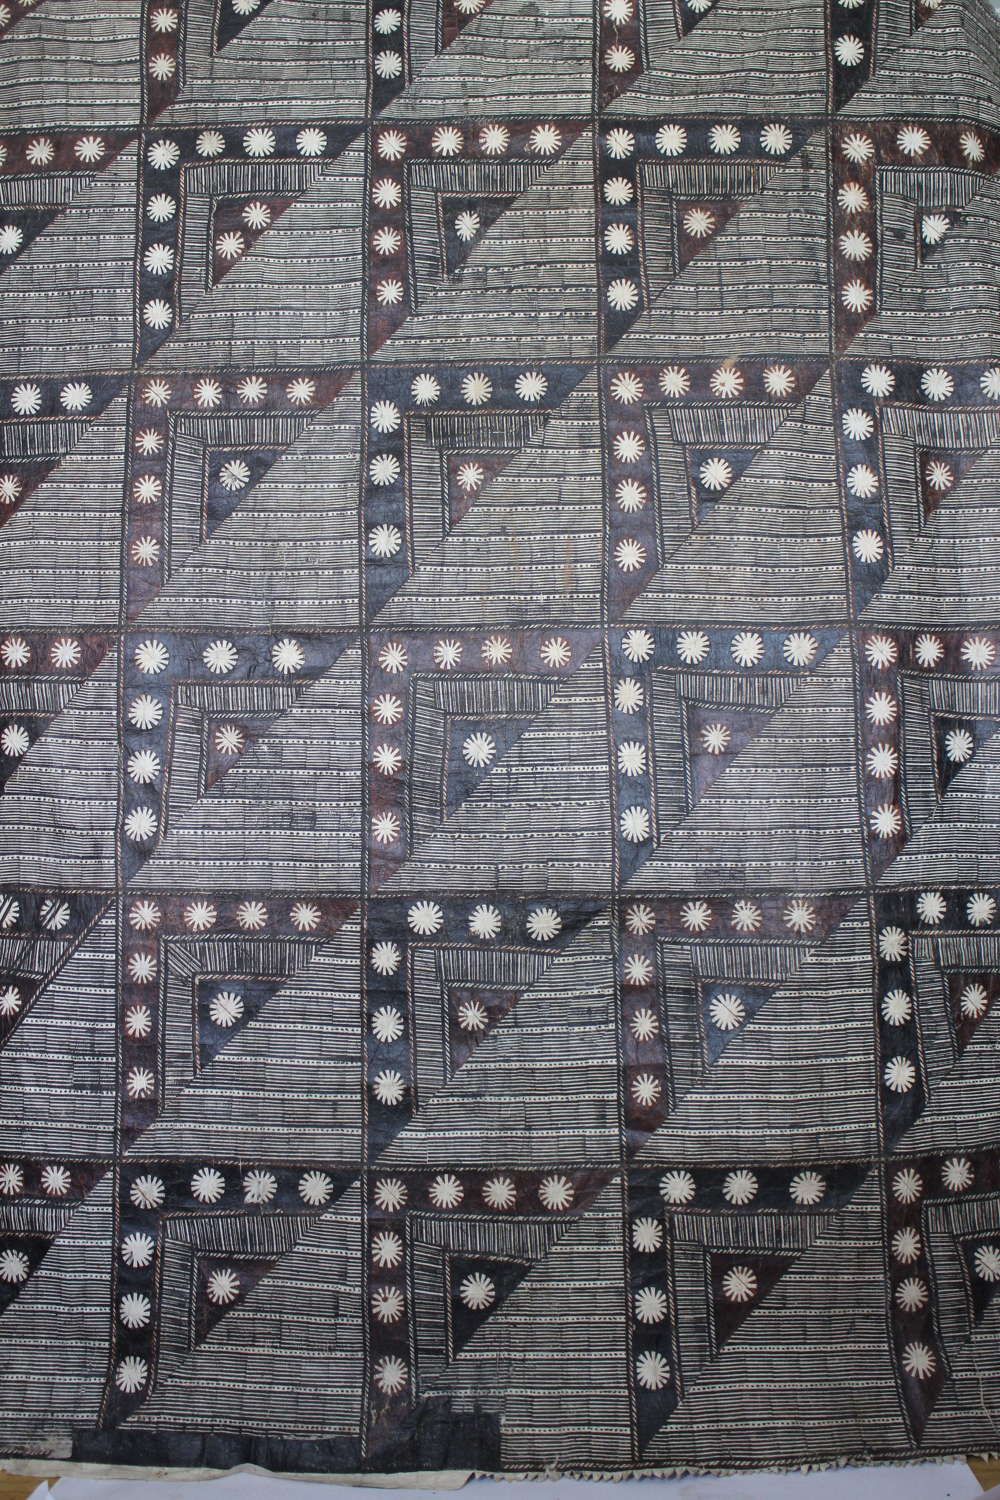 Fiji Tapa cloth